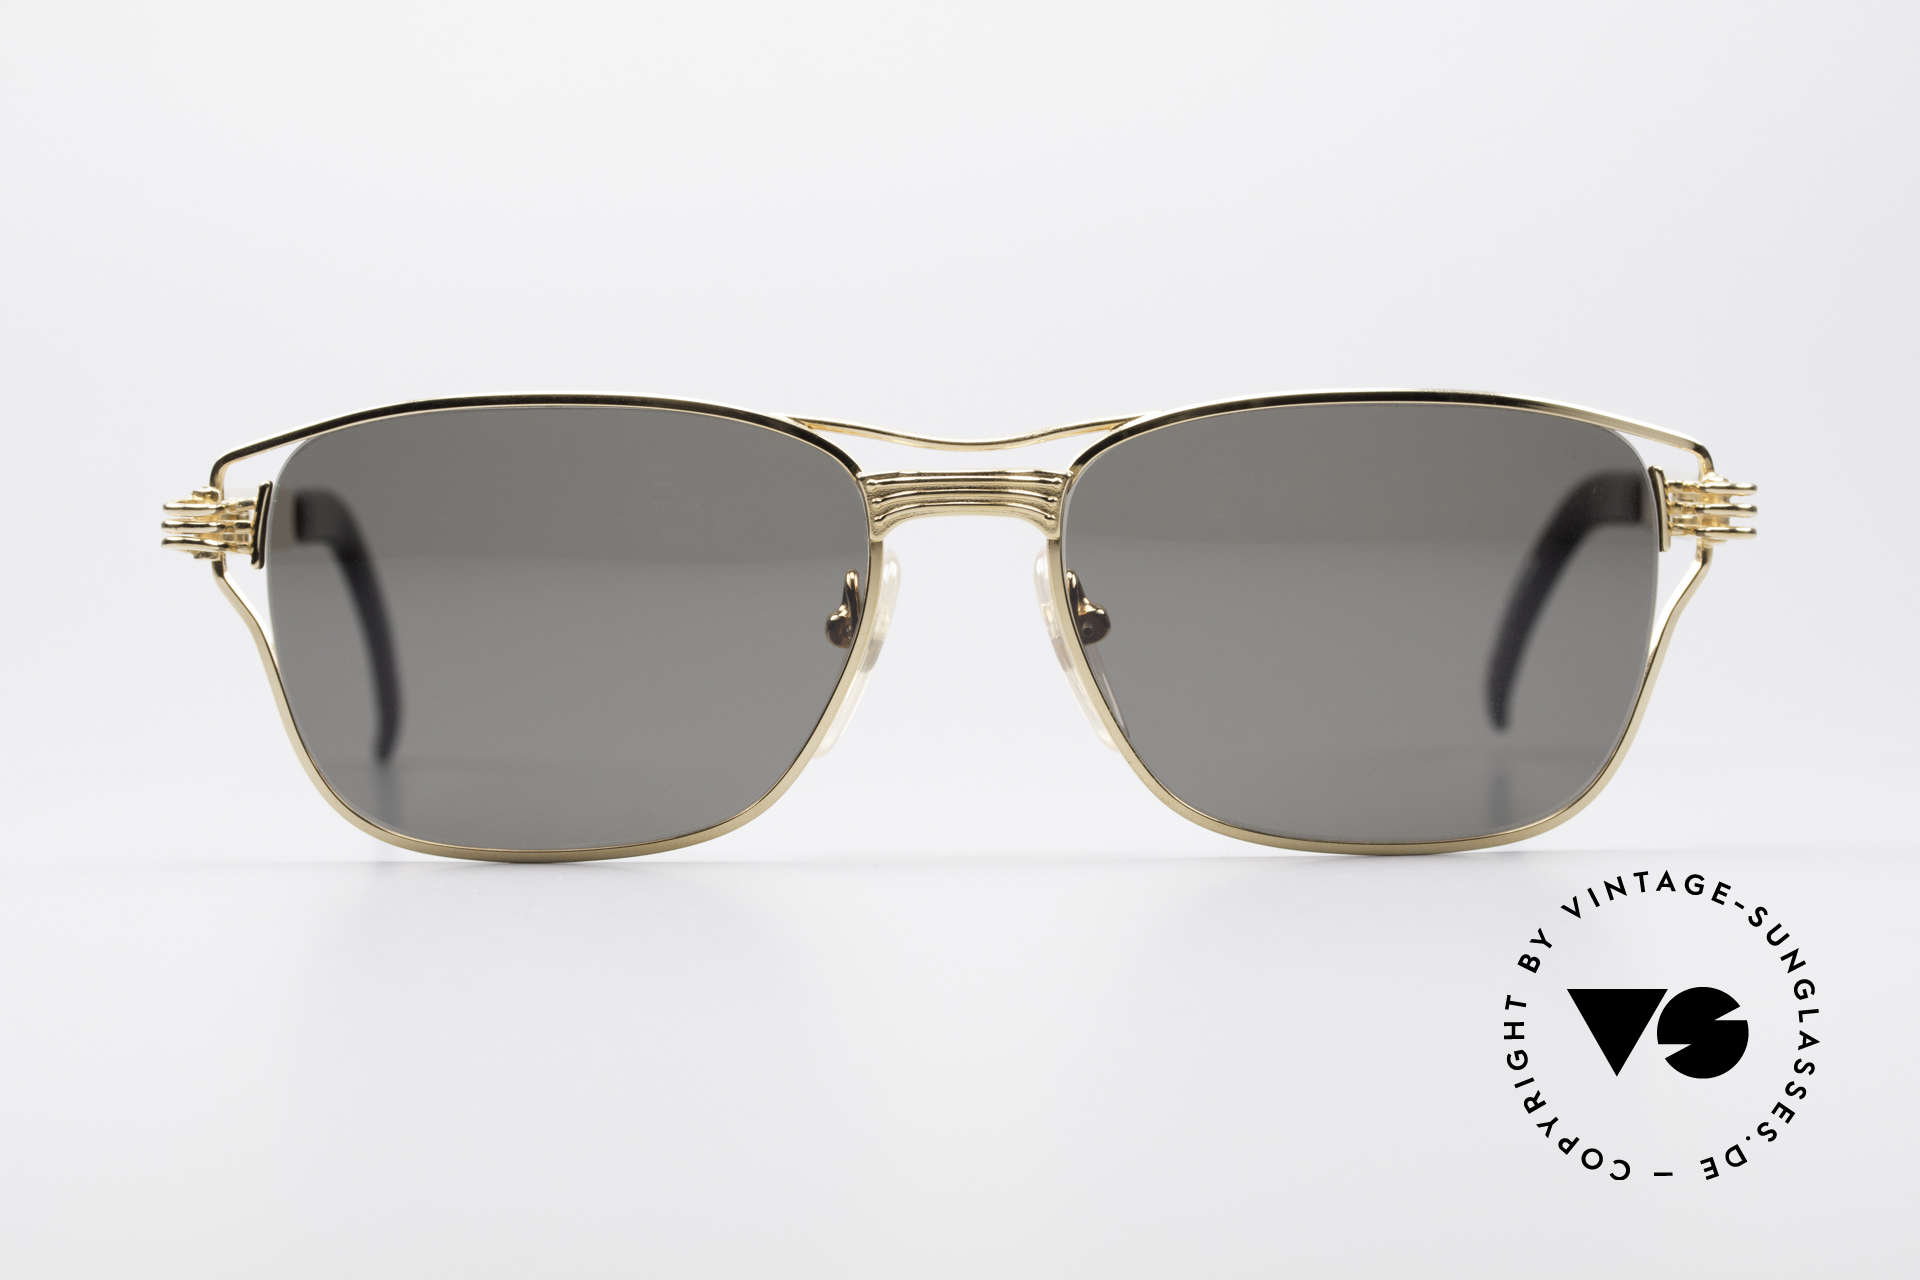 Jean Paul Gaultier 56-4173 Square Designer Sunglasses, mechanical / industrial design (distinctive JPG), Made for Men